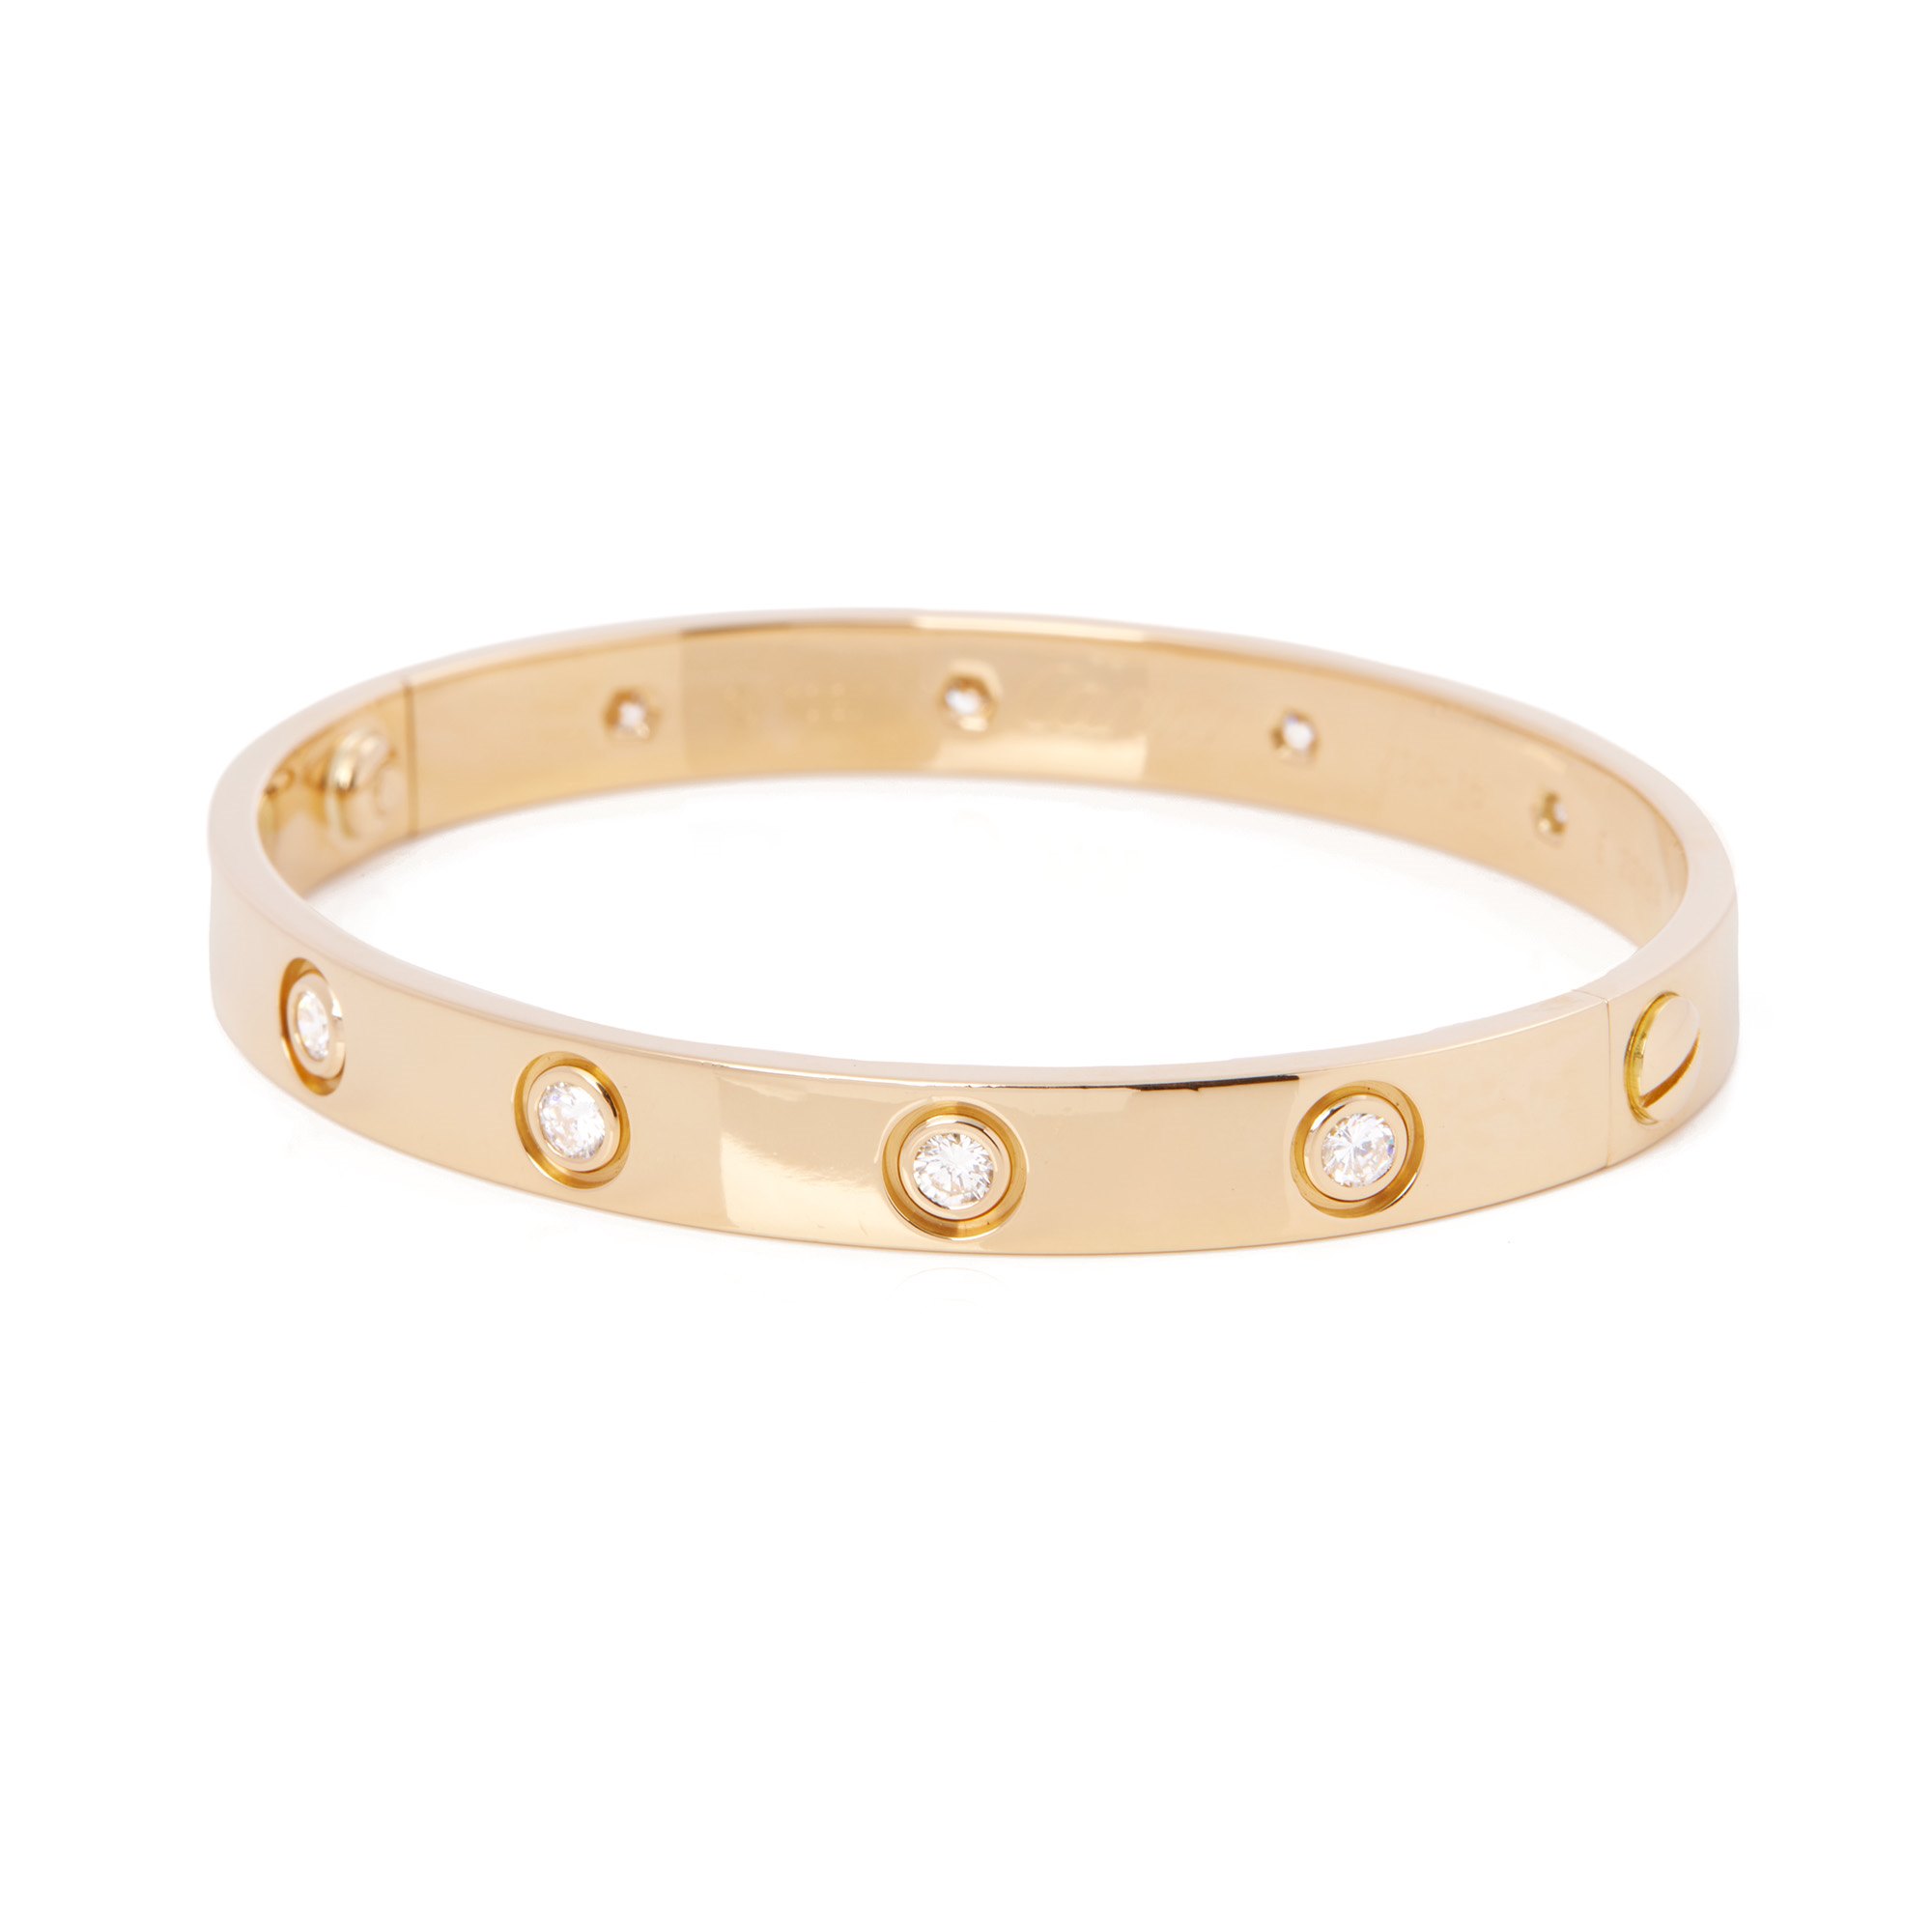 CRB6070217 - LOVE bracelet, 10 diamonds - Rose gold, diamonds - Cartier